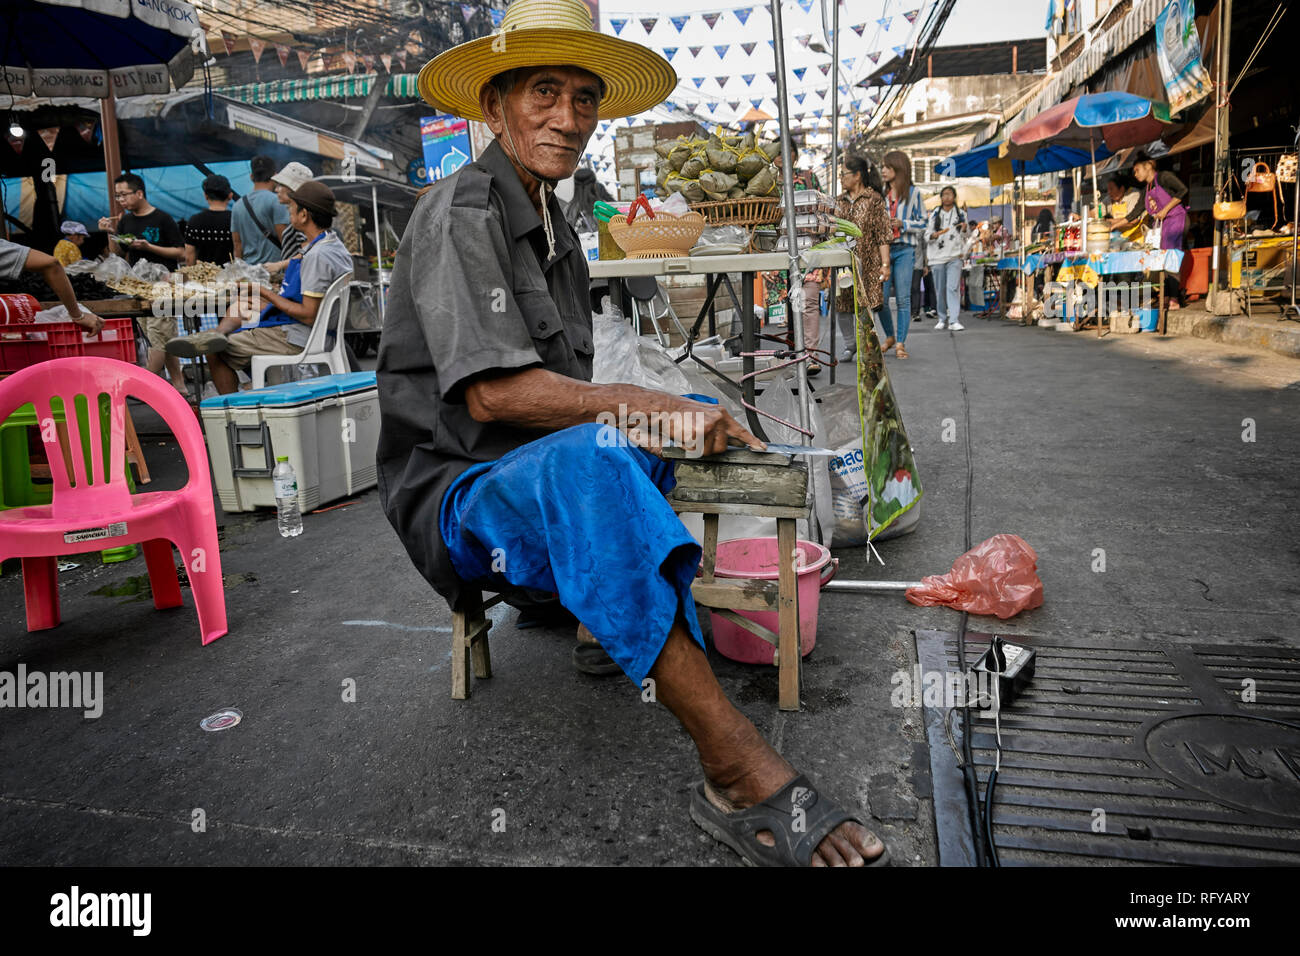 Knife grinder. Elderly Thai man at work in the street. Thailand S. E. Asia Stock Photo